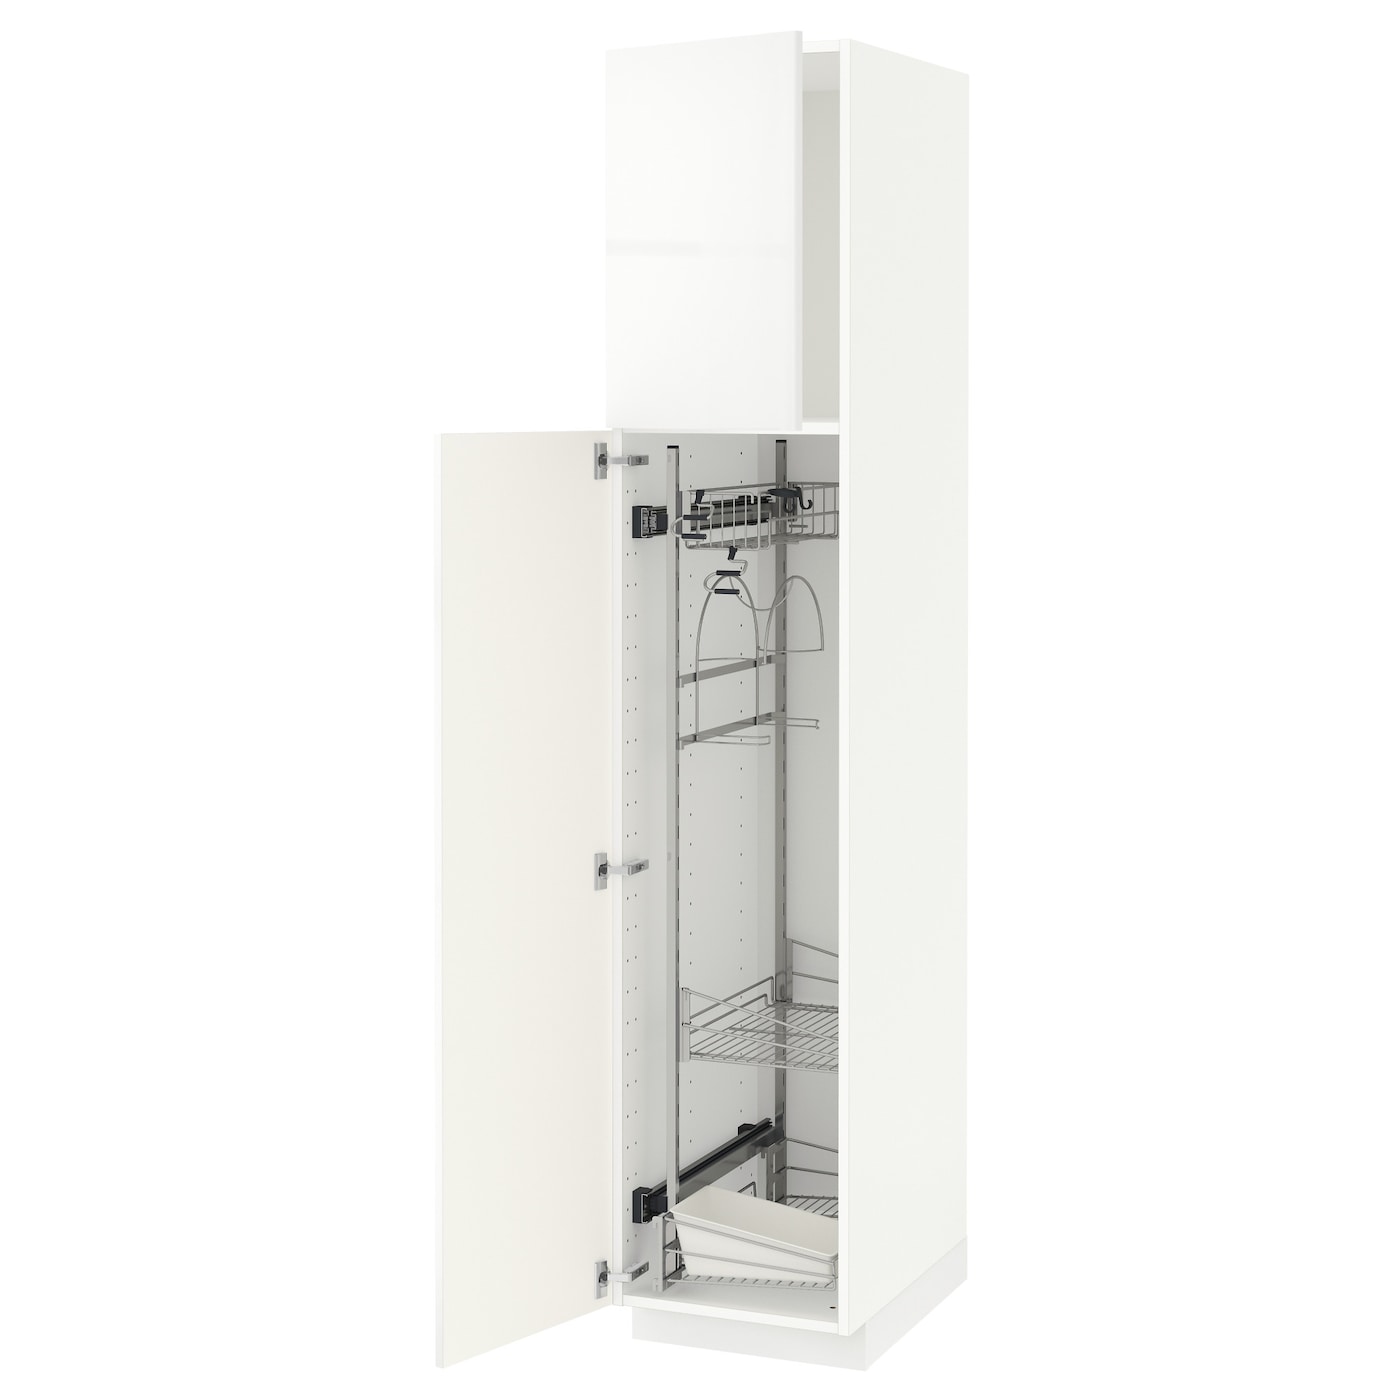 Высокий шкаф/бытовой - IKEA METOD/МЕТОД ИКЕА, 200х60х40 см, белый глянцевый